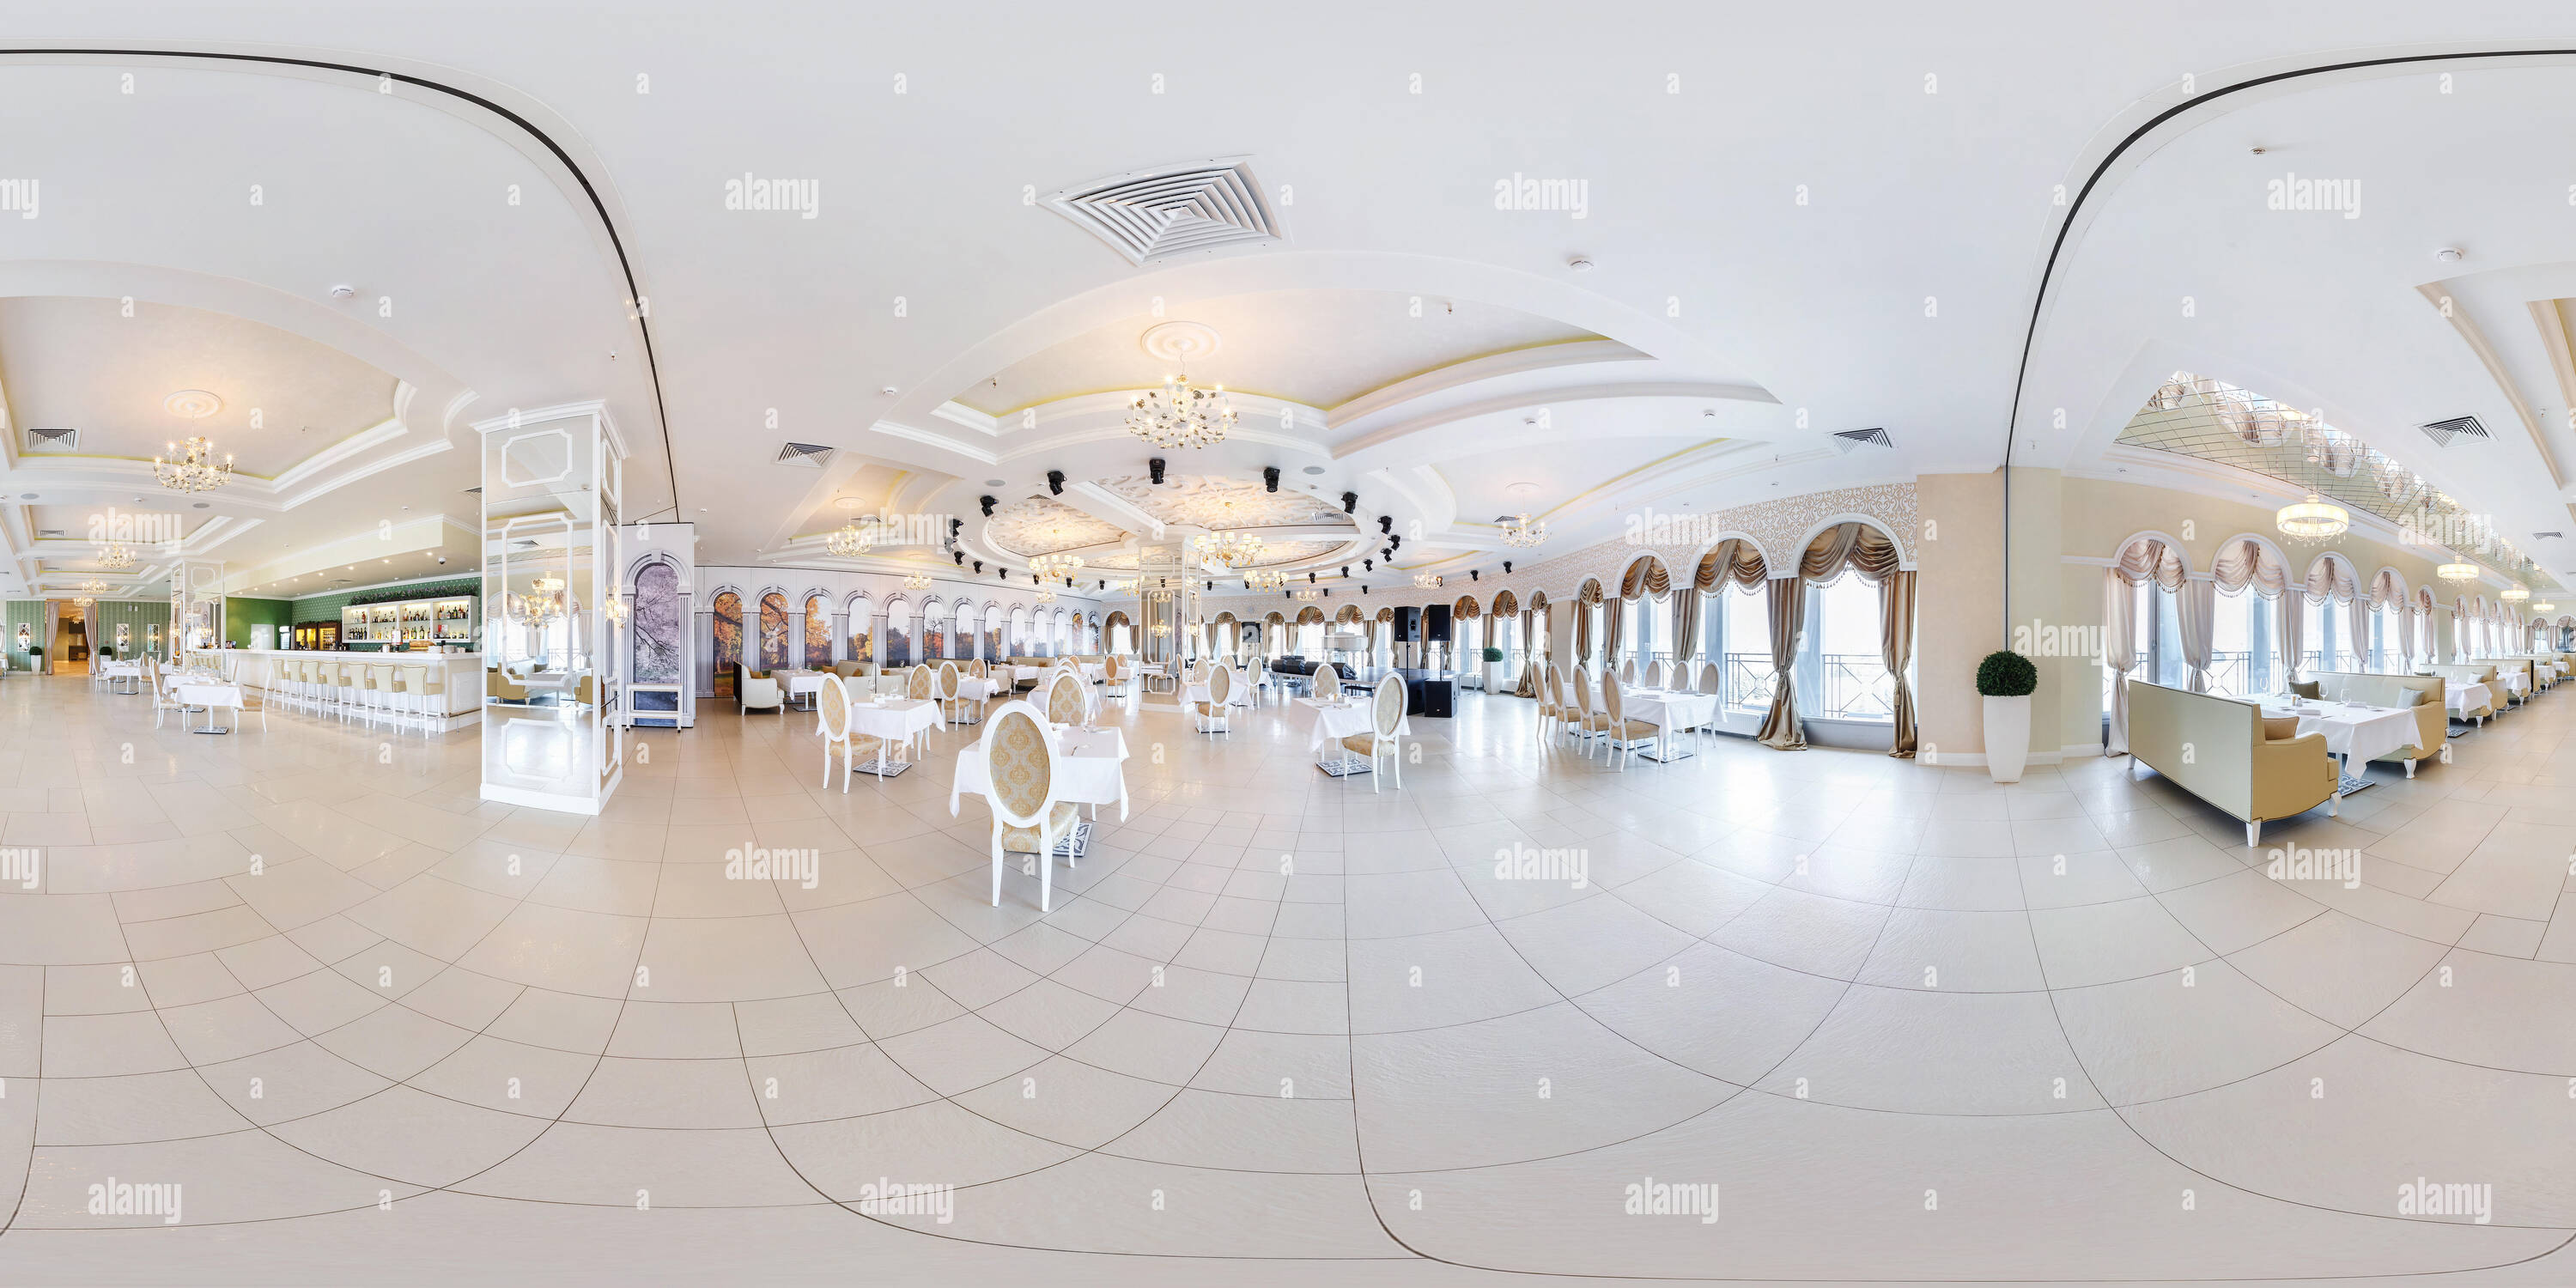 360 degree panoramic view of MINSK, BELARUS - NOVEMBER 14, 2014: Full 360 degree panorama in equirectangular spherical projection in interior stylish restaurant Belvedere